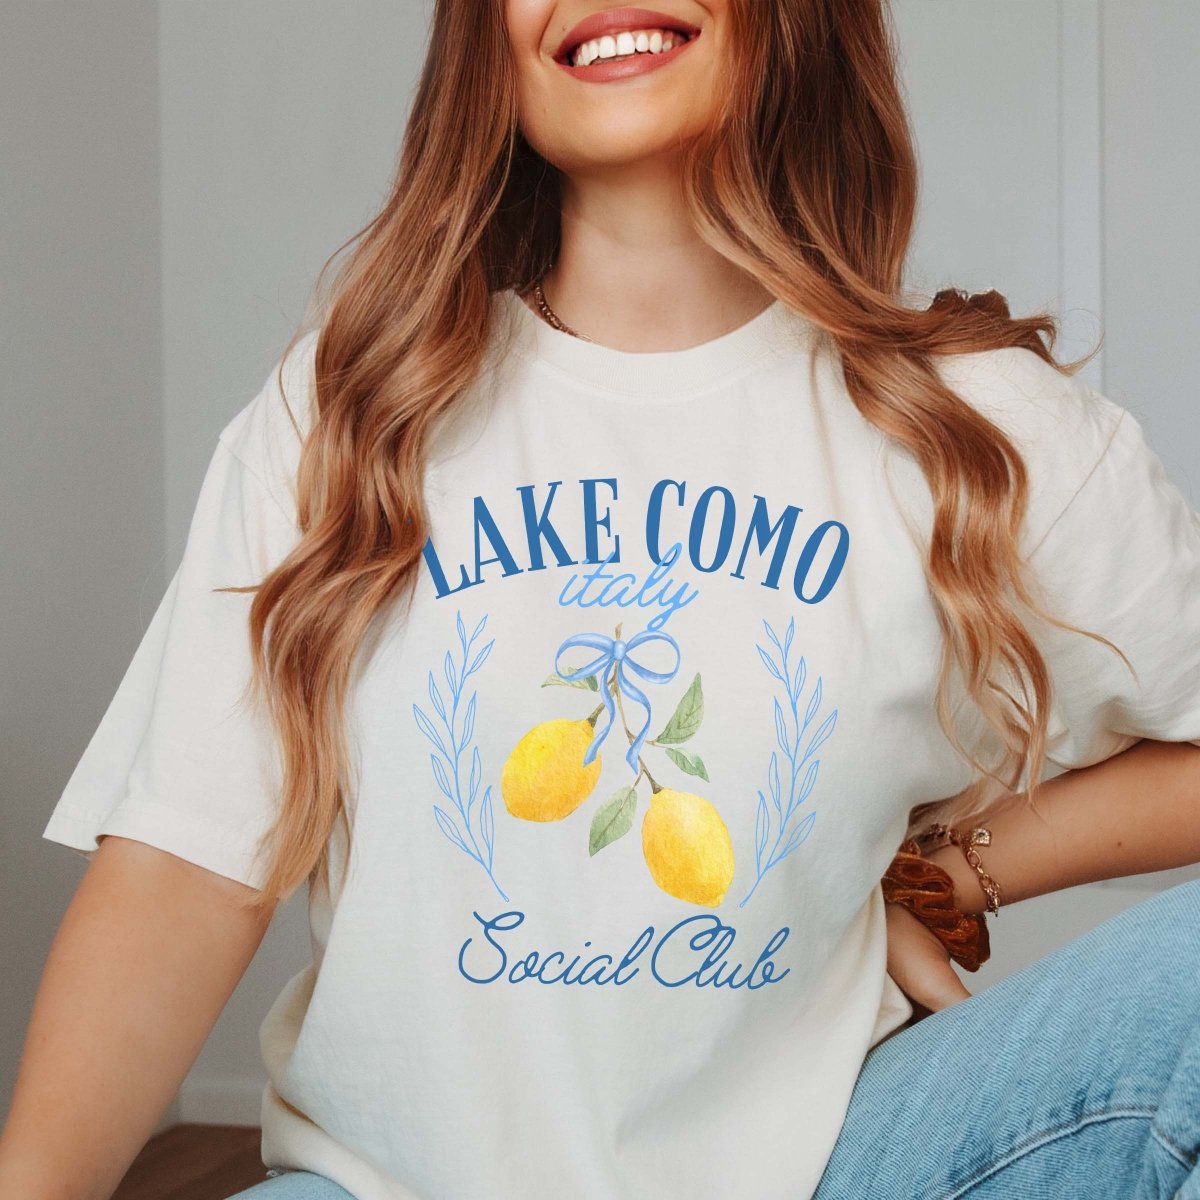 Lake Como Social Club Comfort Color Tee - Limeberry Designs